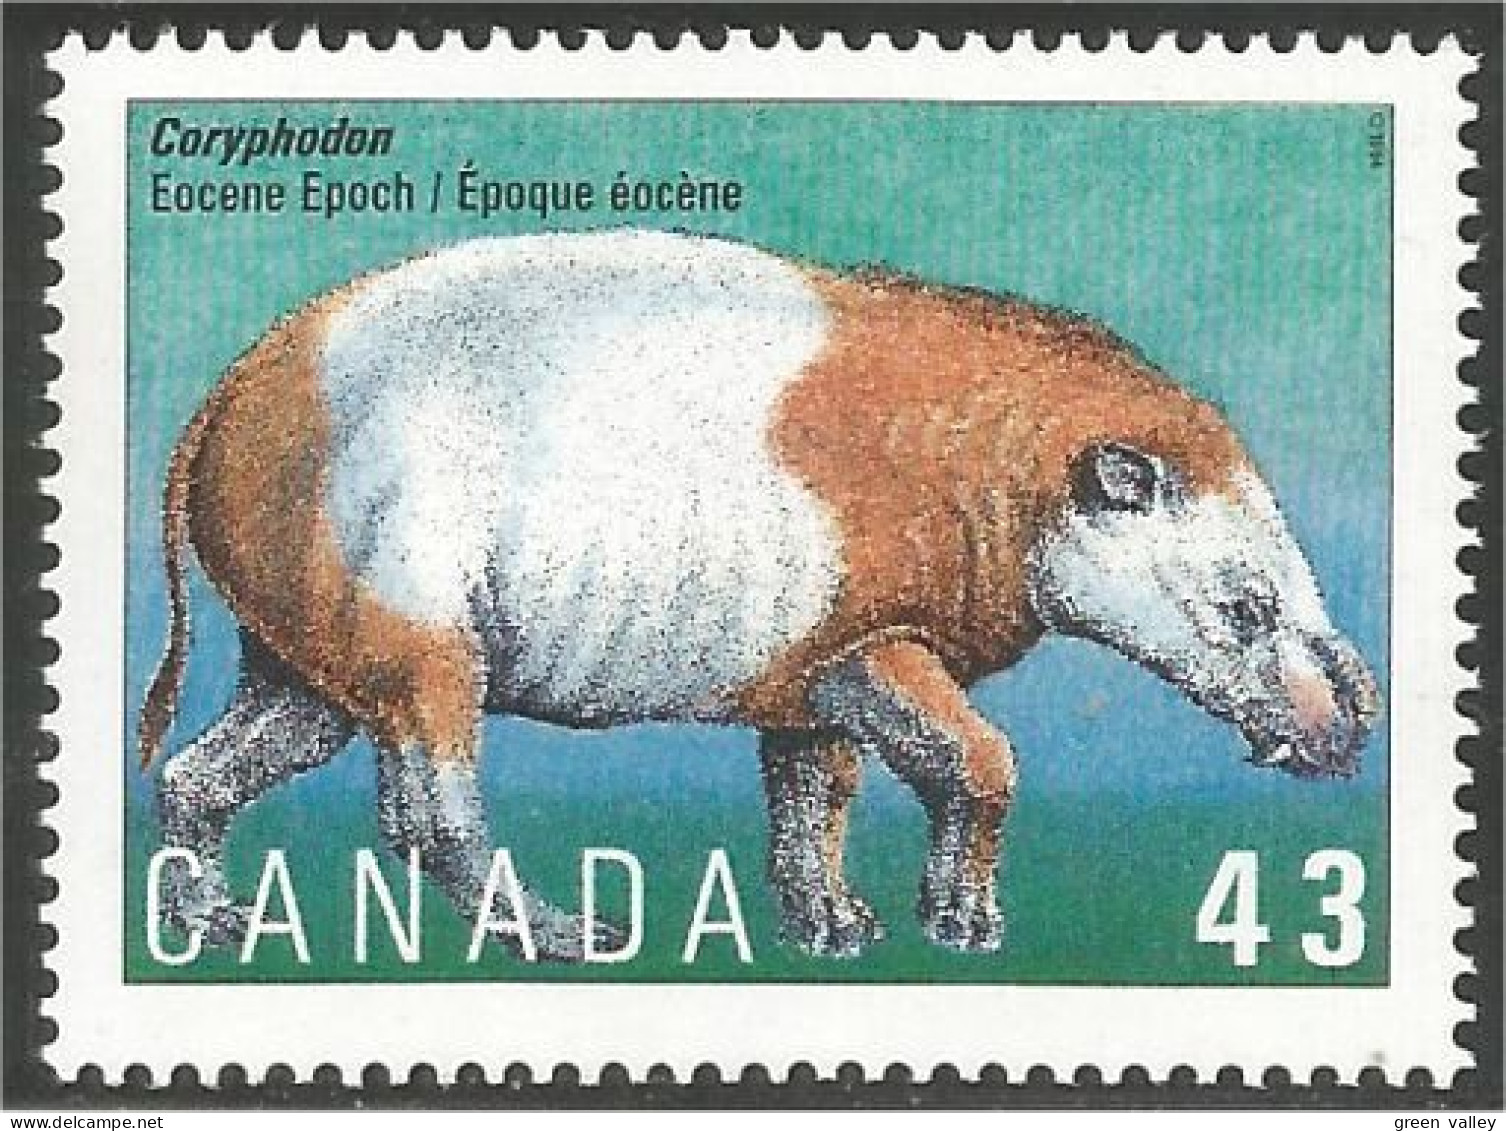 Canada Prehistoric Mammouth Coryphodon MNH ** Neuf SC (C15-29b) - Prehistorics